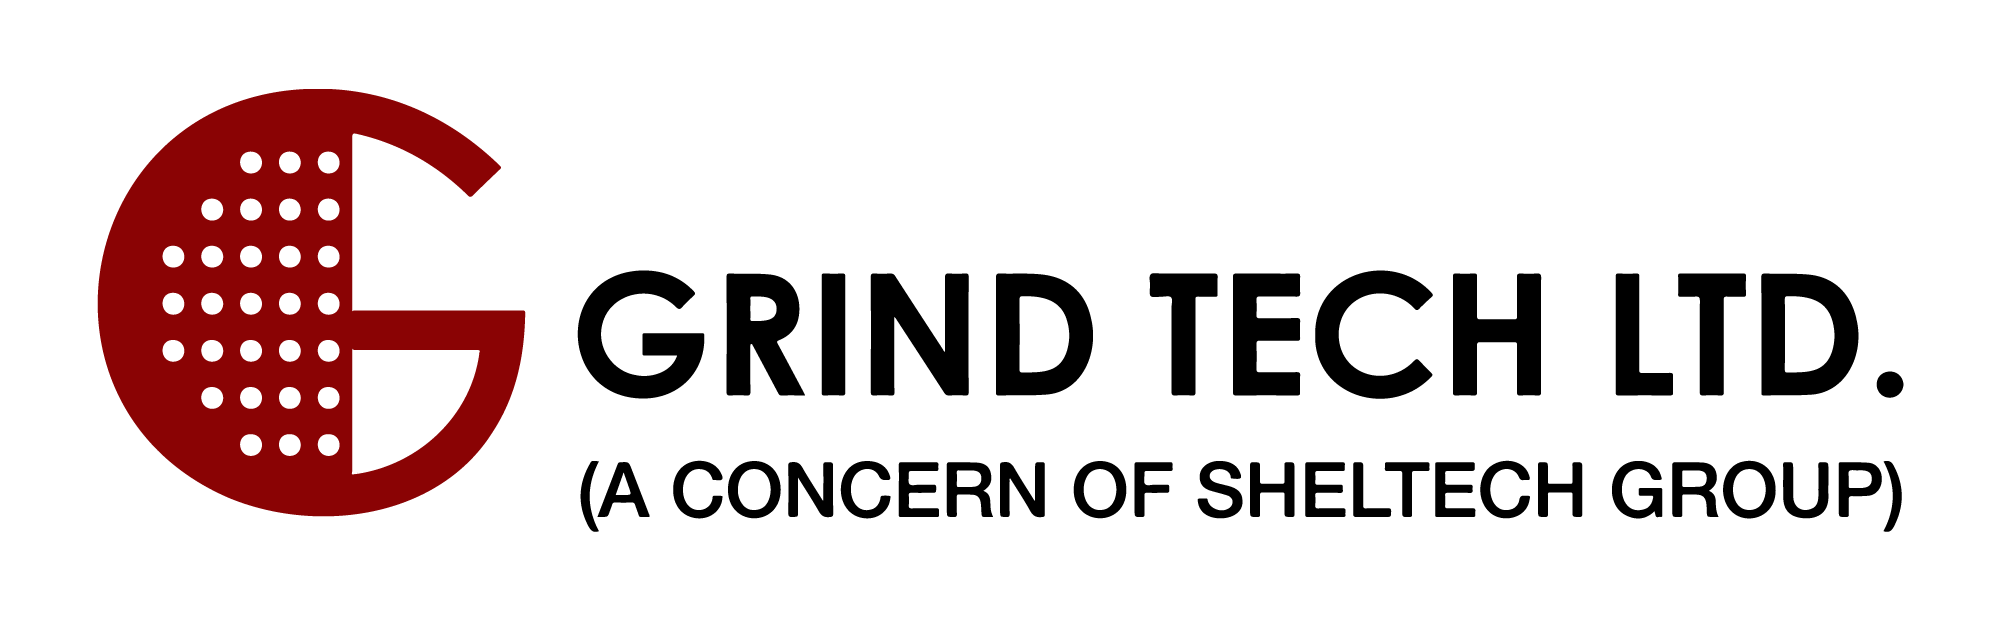 Grind Tech Ltd